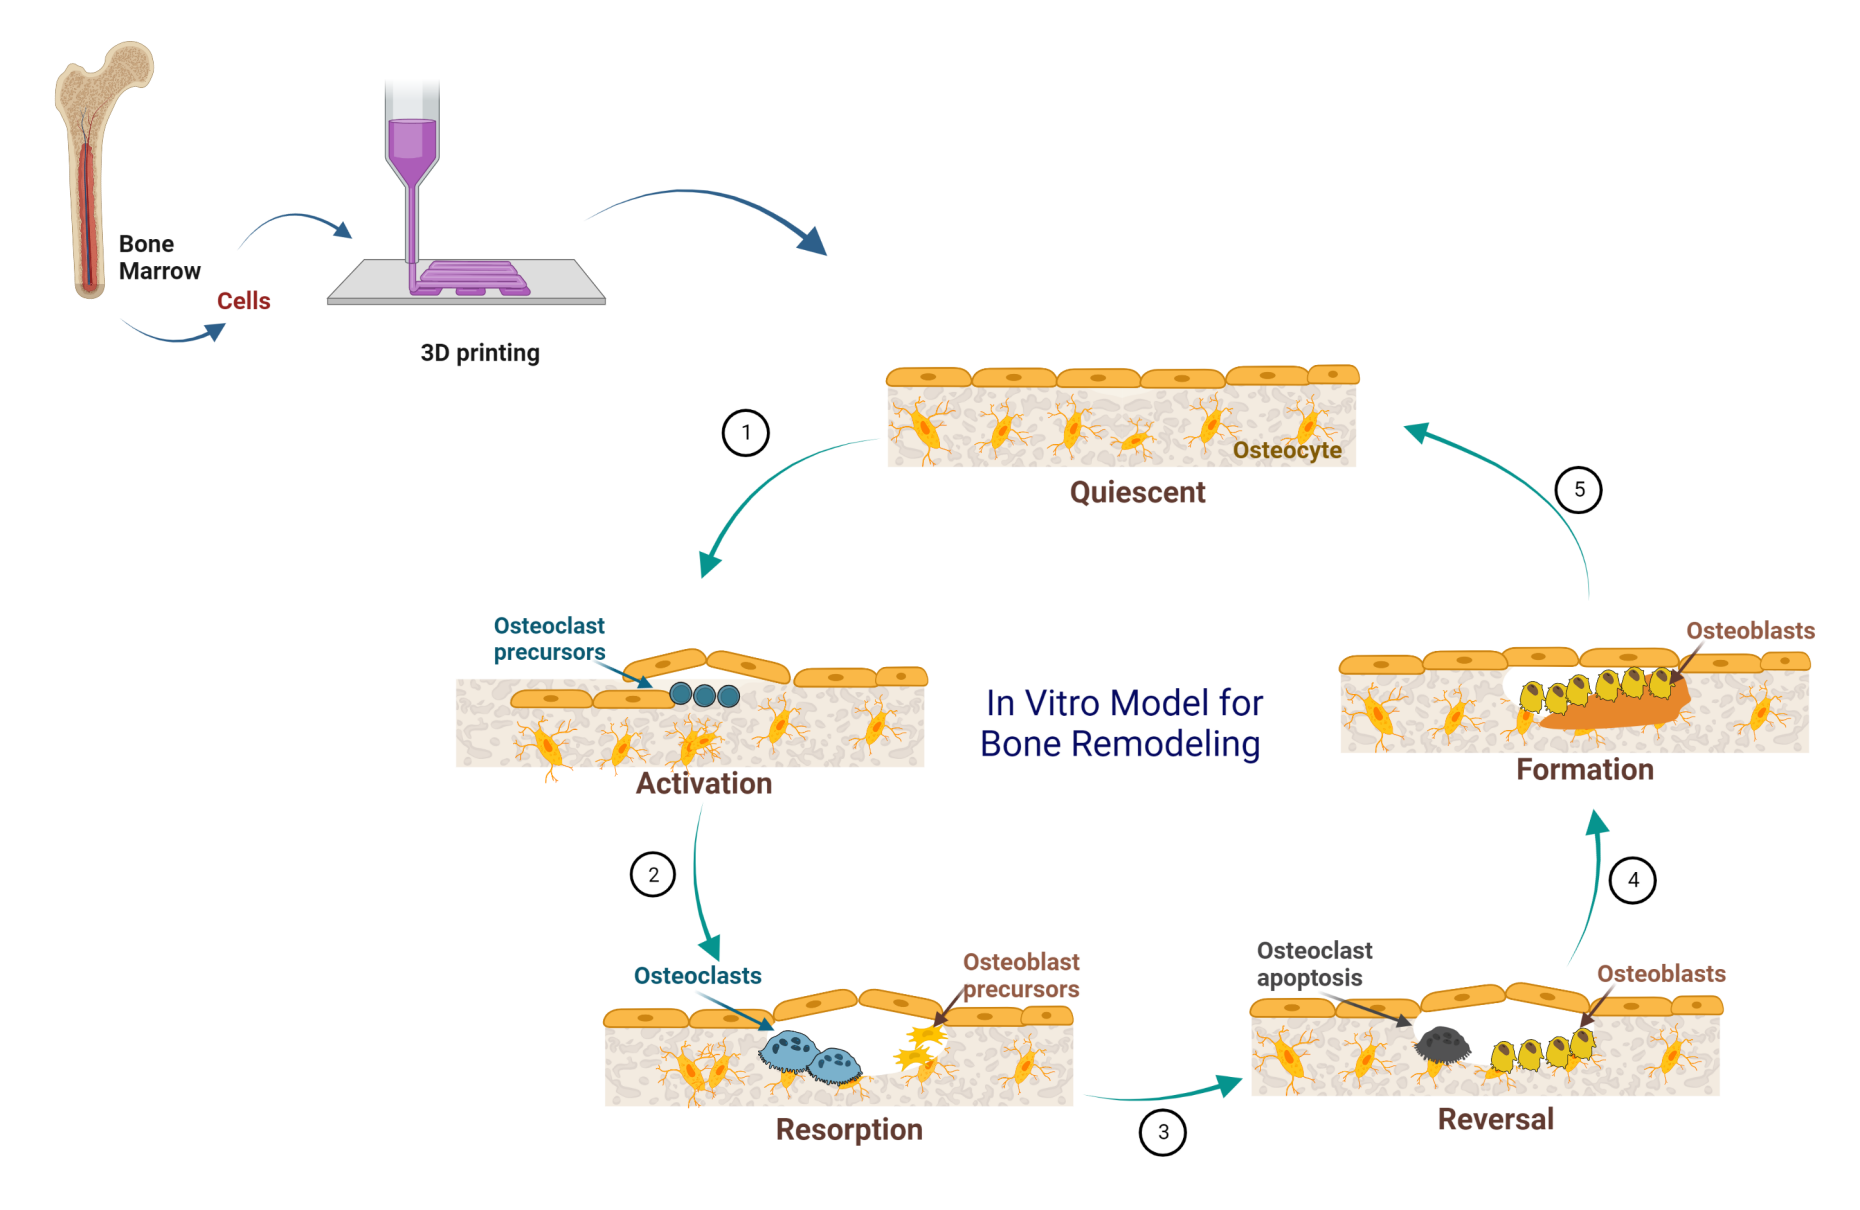 Enlarged view: In vitro model for bone remodeling